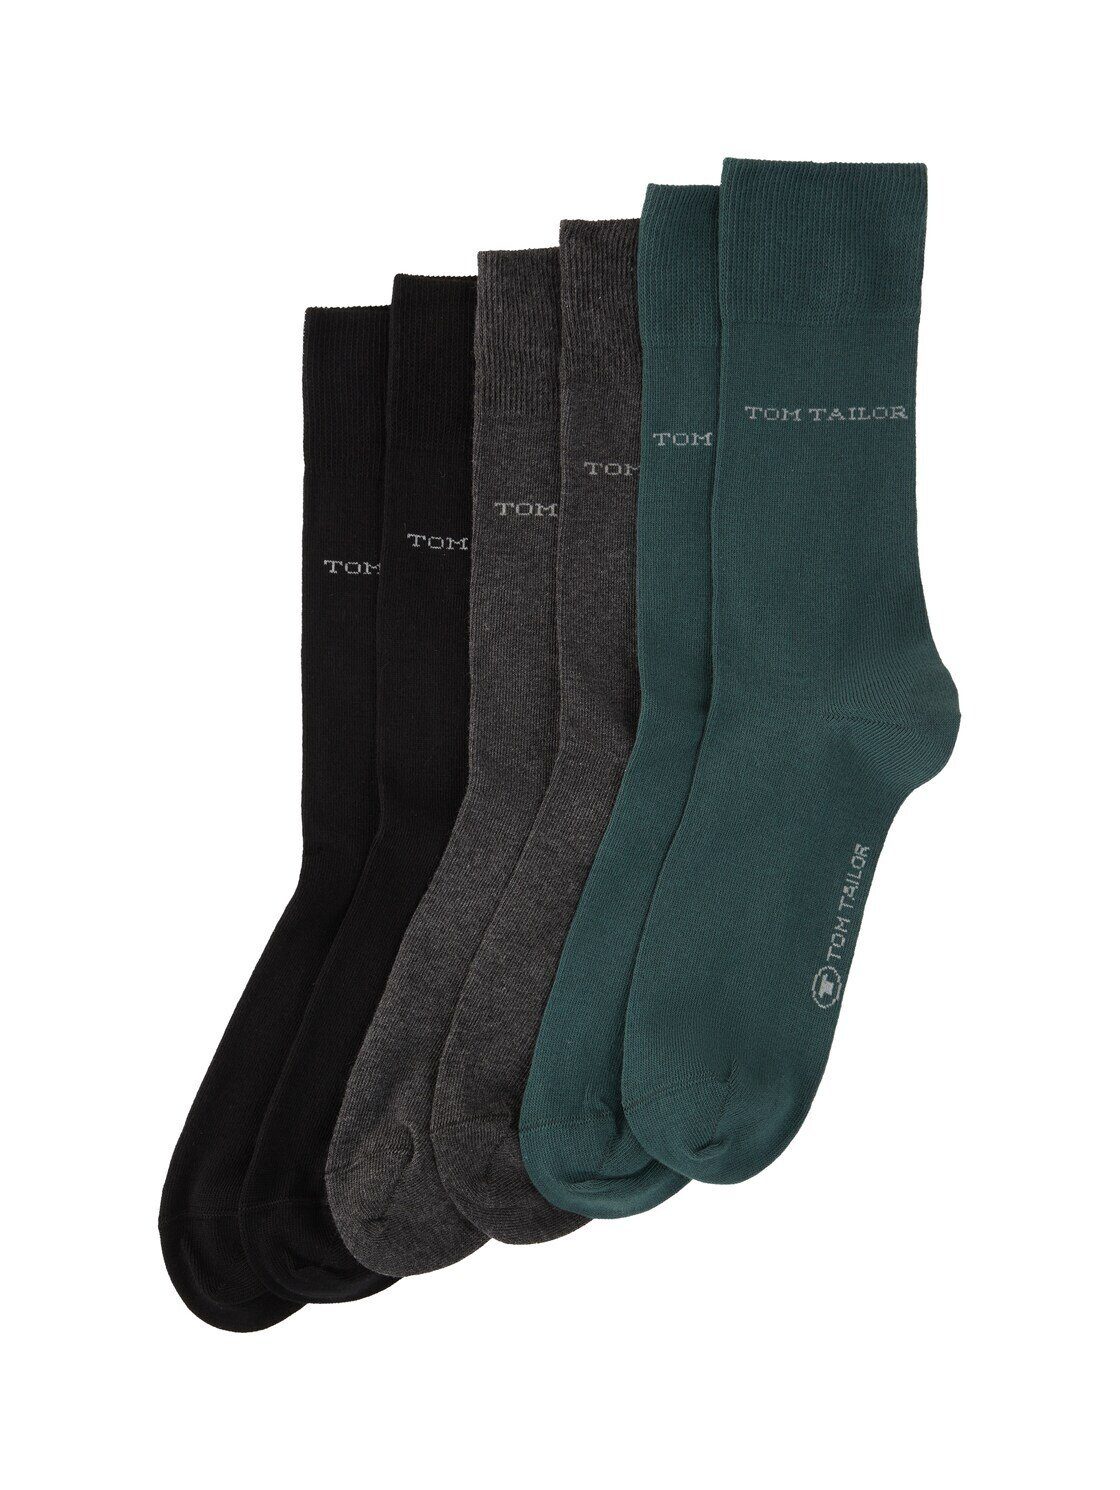 TOM TAILOR Socken 6er-Set Socken (im Sechserpack) anthracite melange